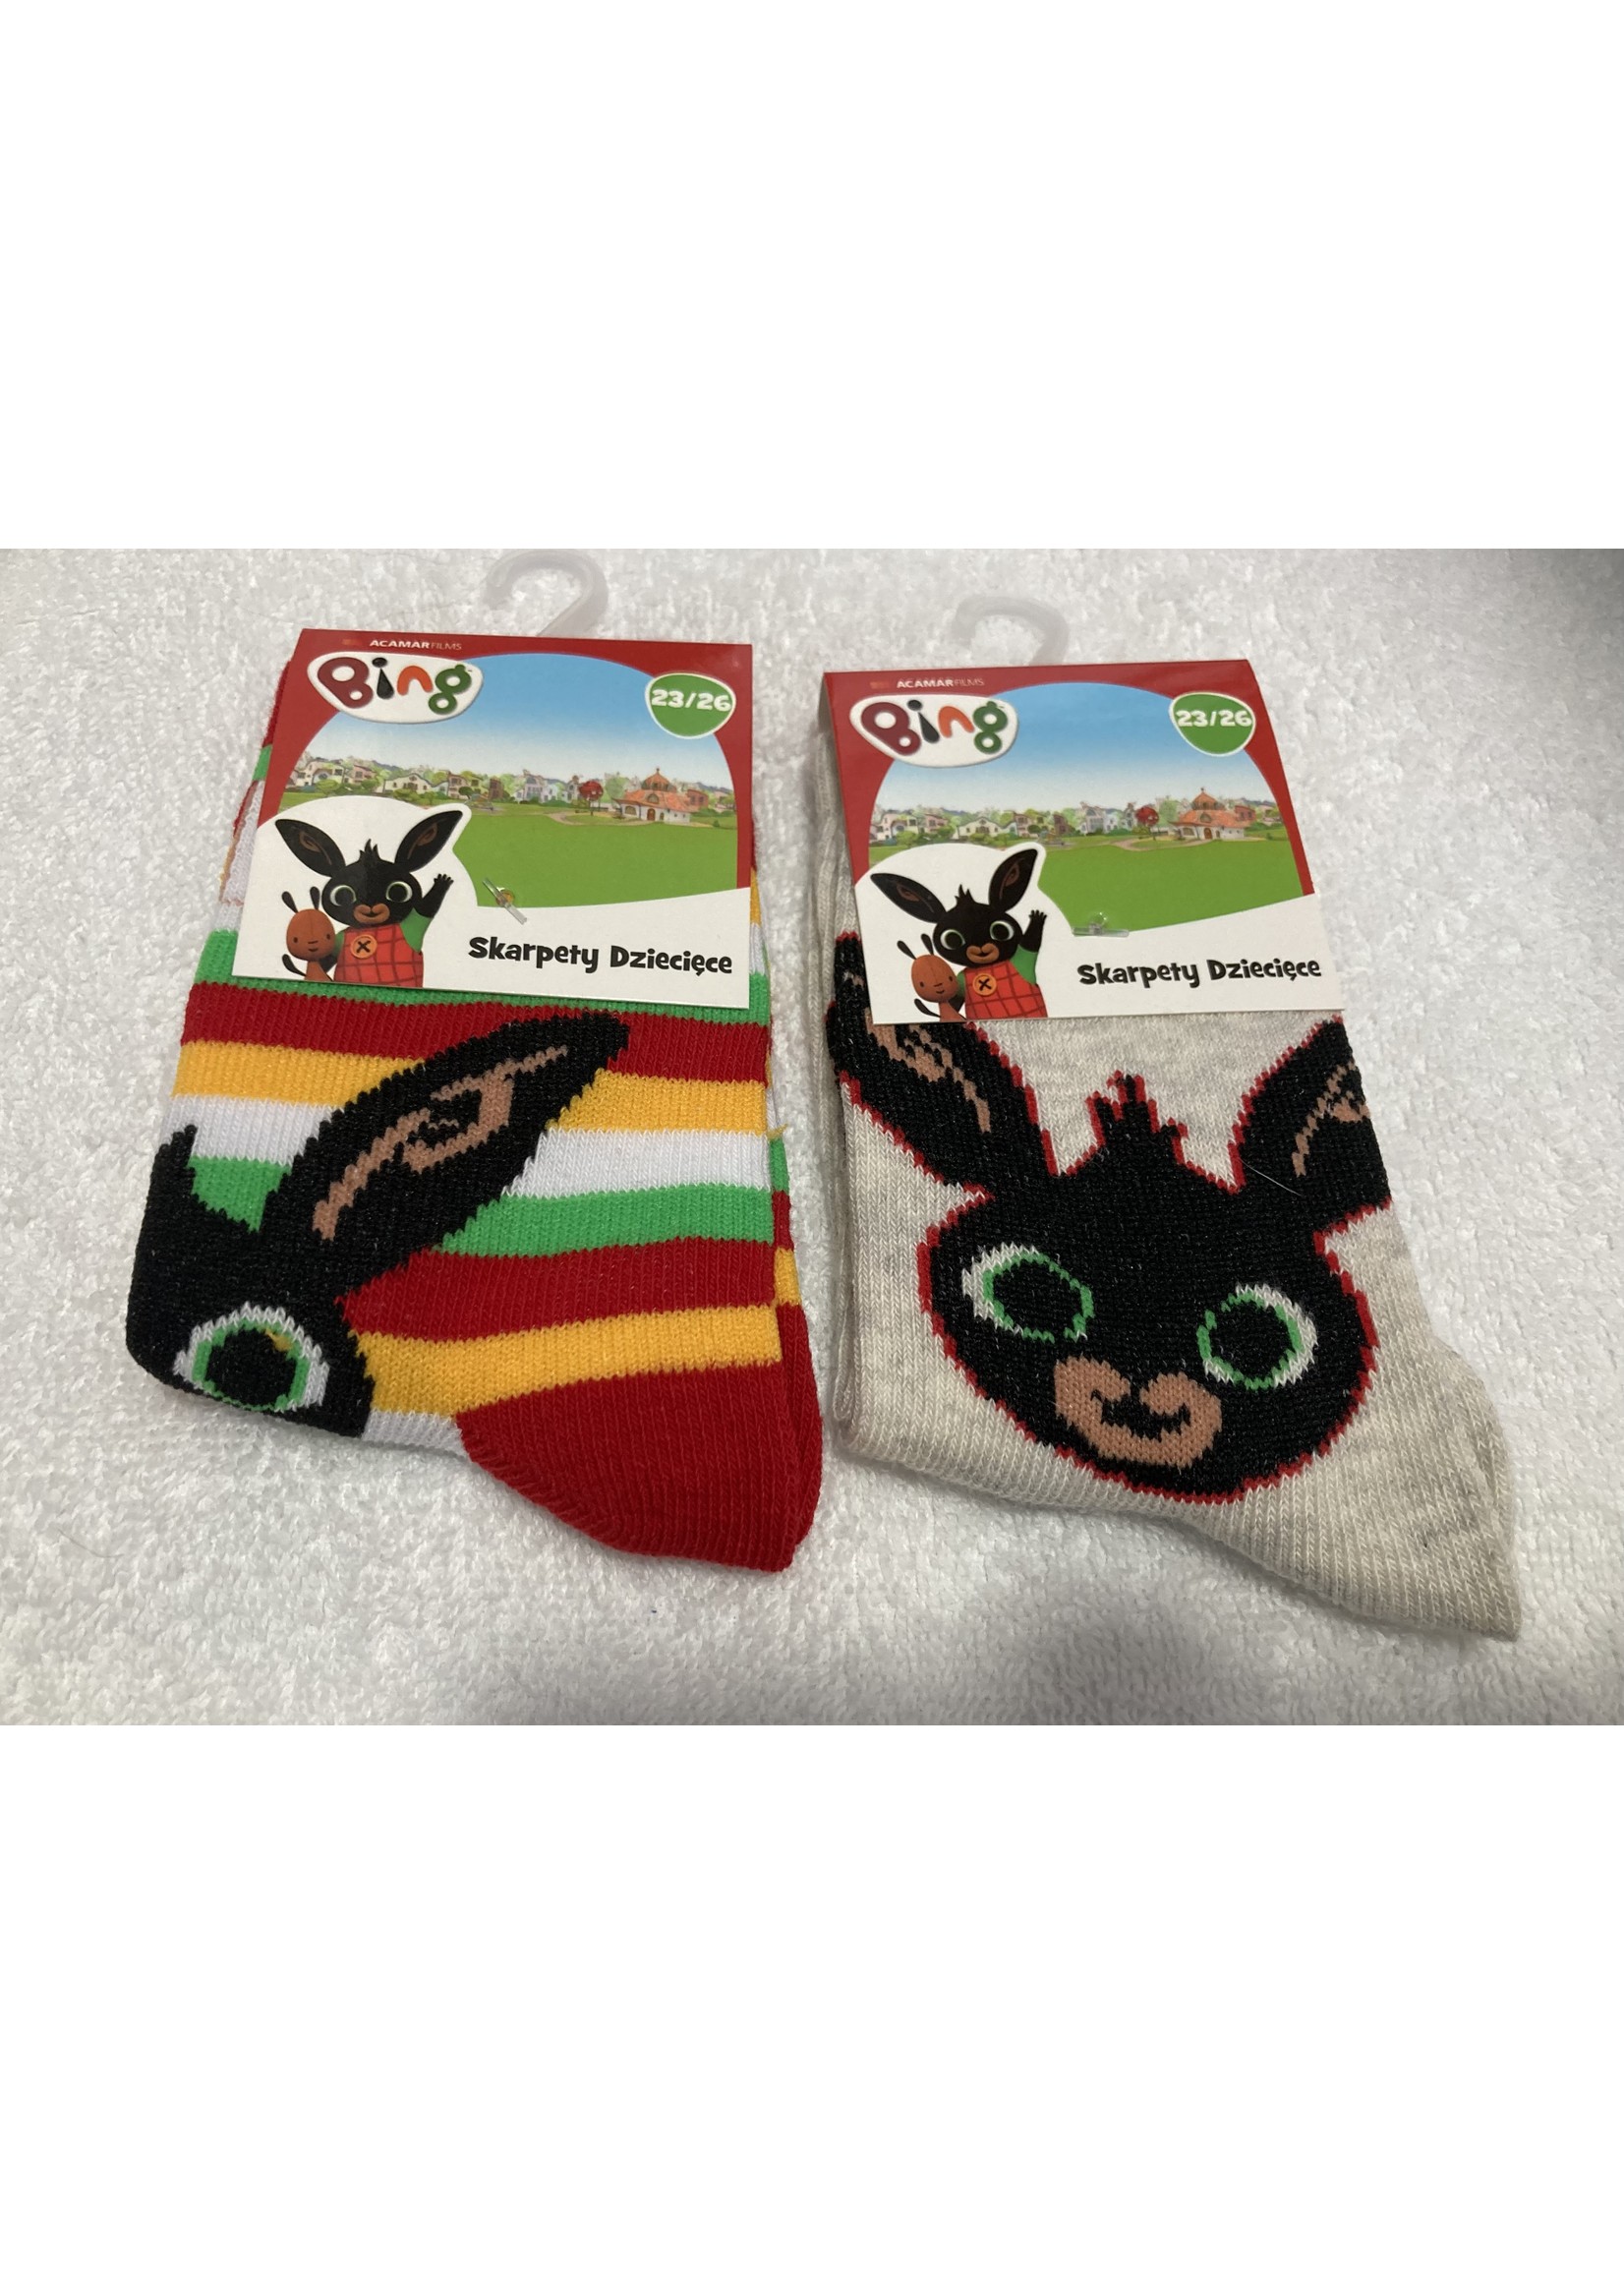 Bing Bunny Bing socks from BING 2 pack